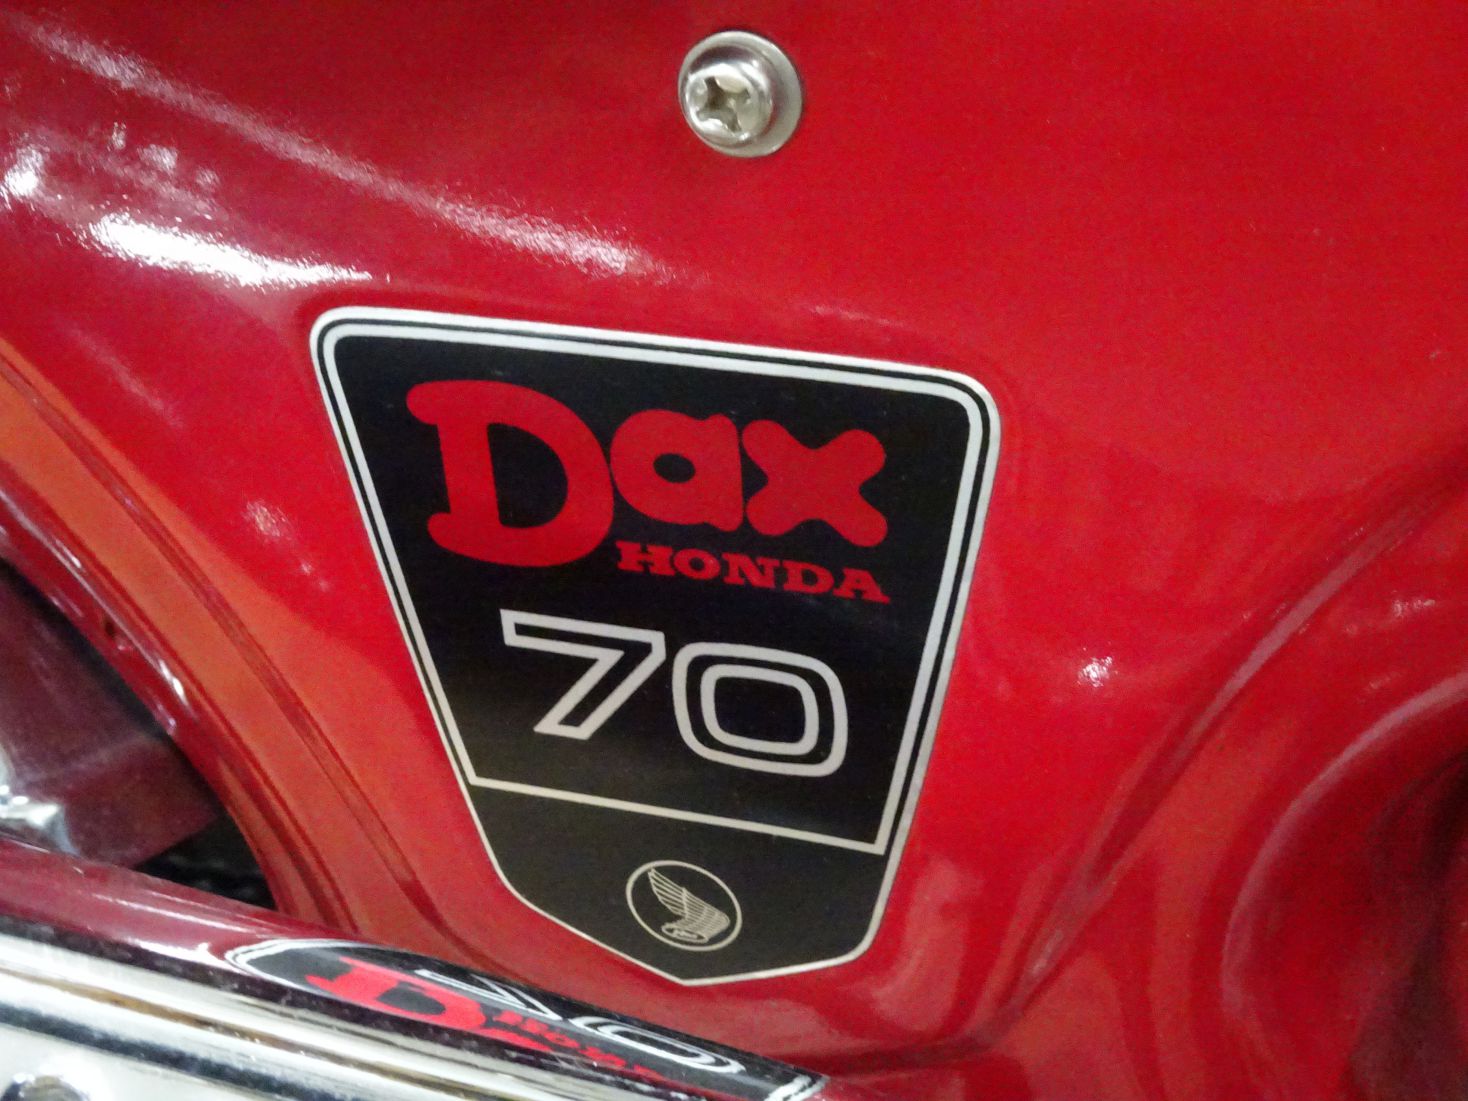 DAX70